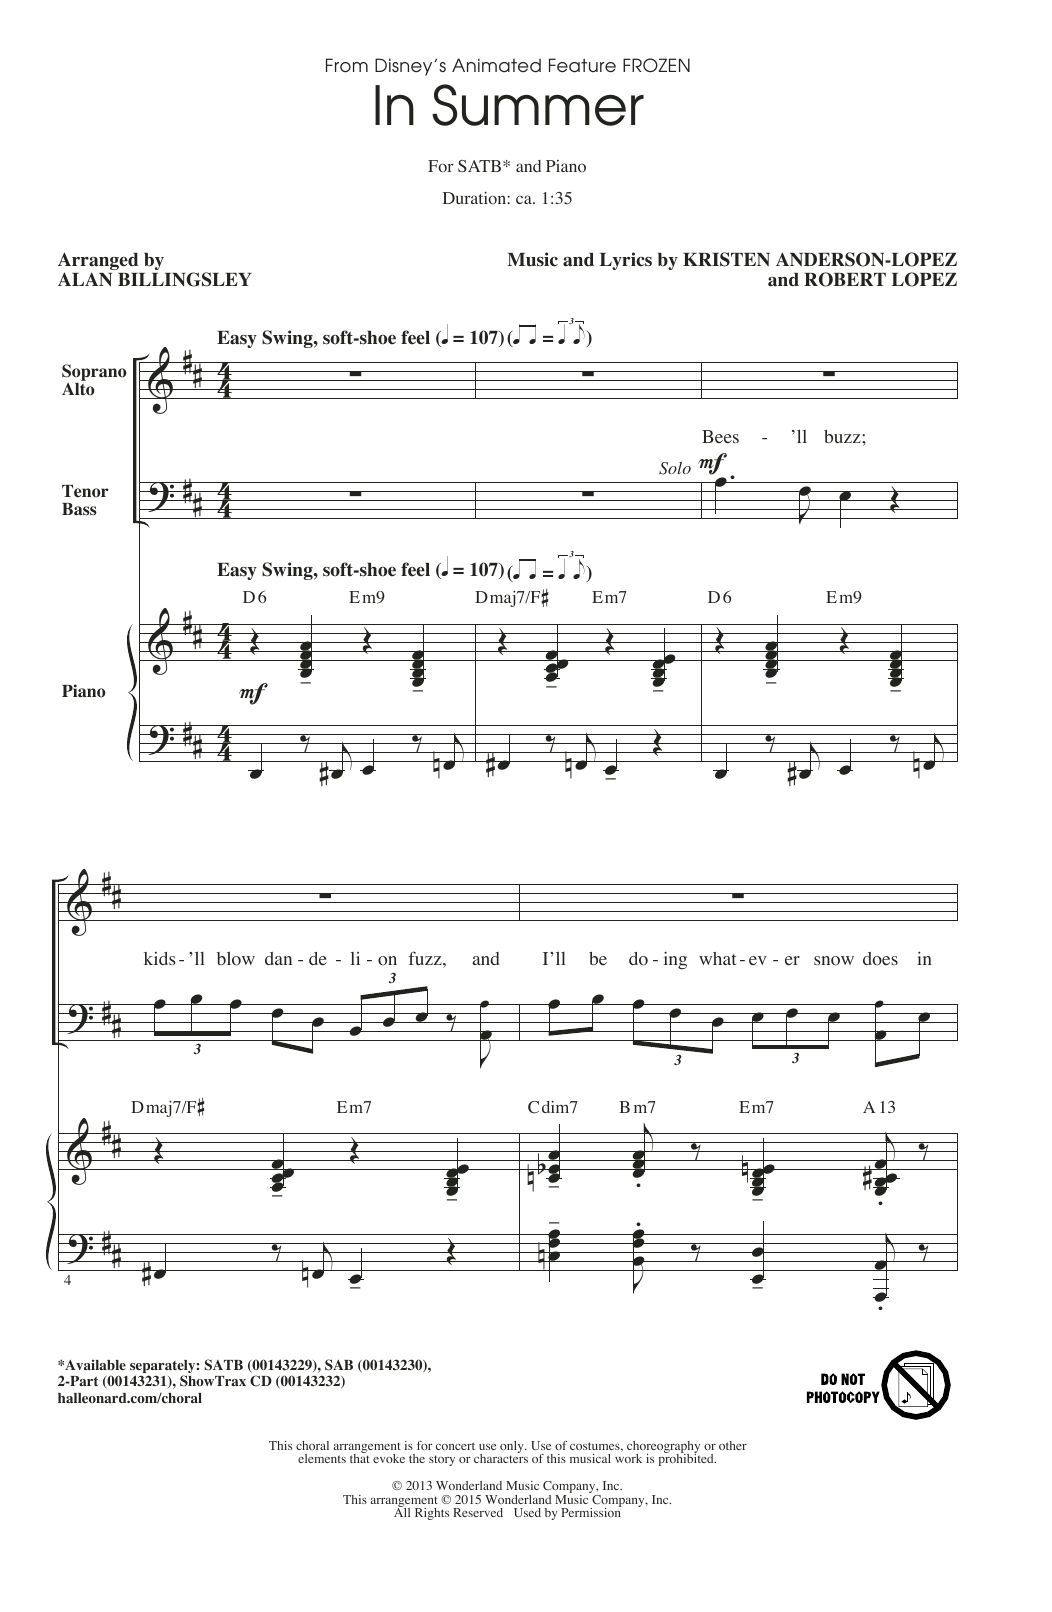 Josh Gad In Summer (from Disney's Frozen) (arr. Alan Billingsley) Sheet Music Notes & Chords for 2-Part Choir - Download or Print PDF